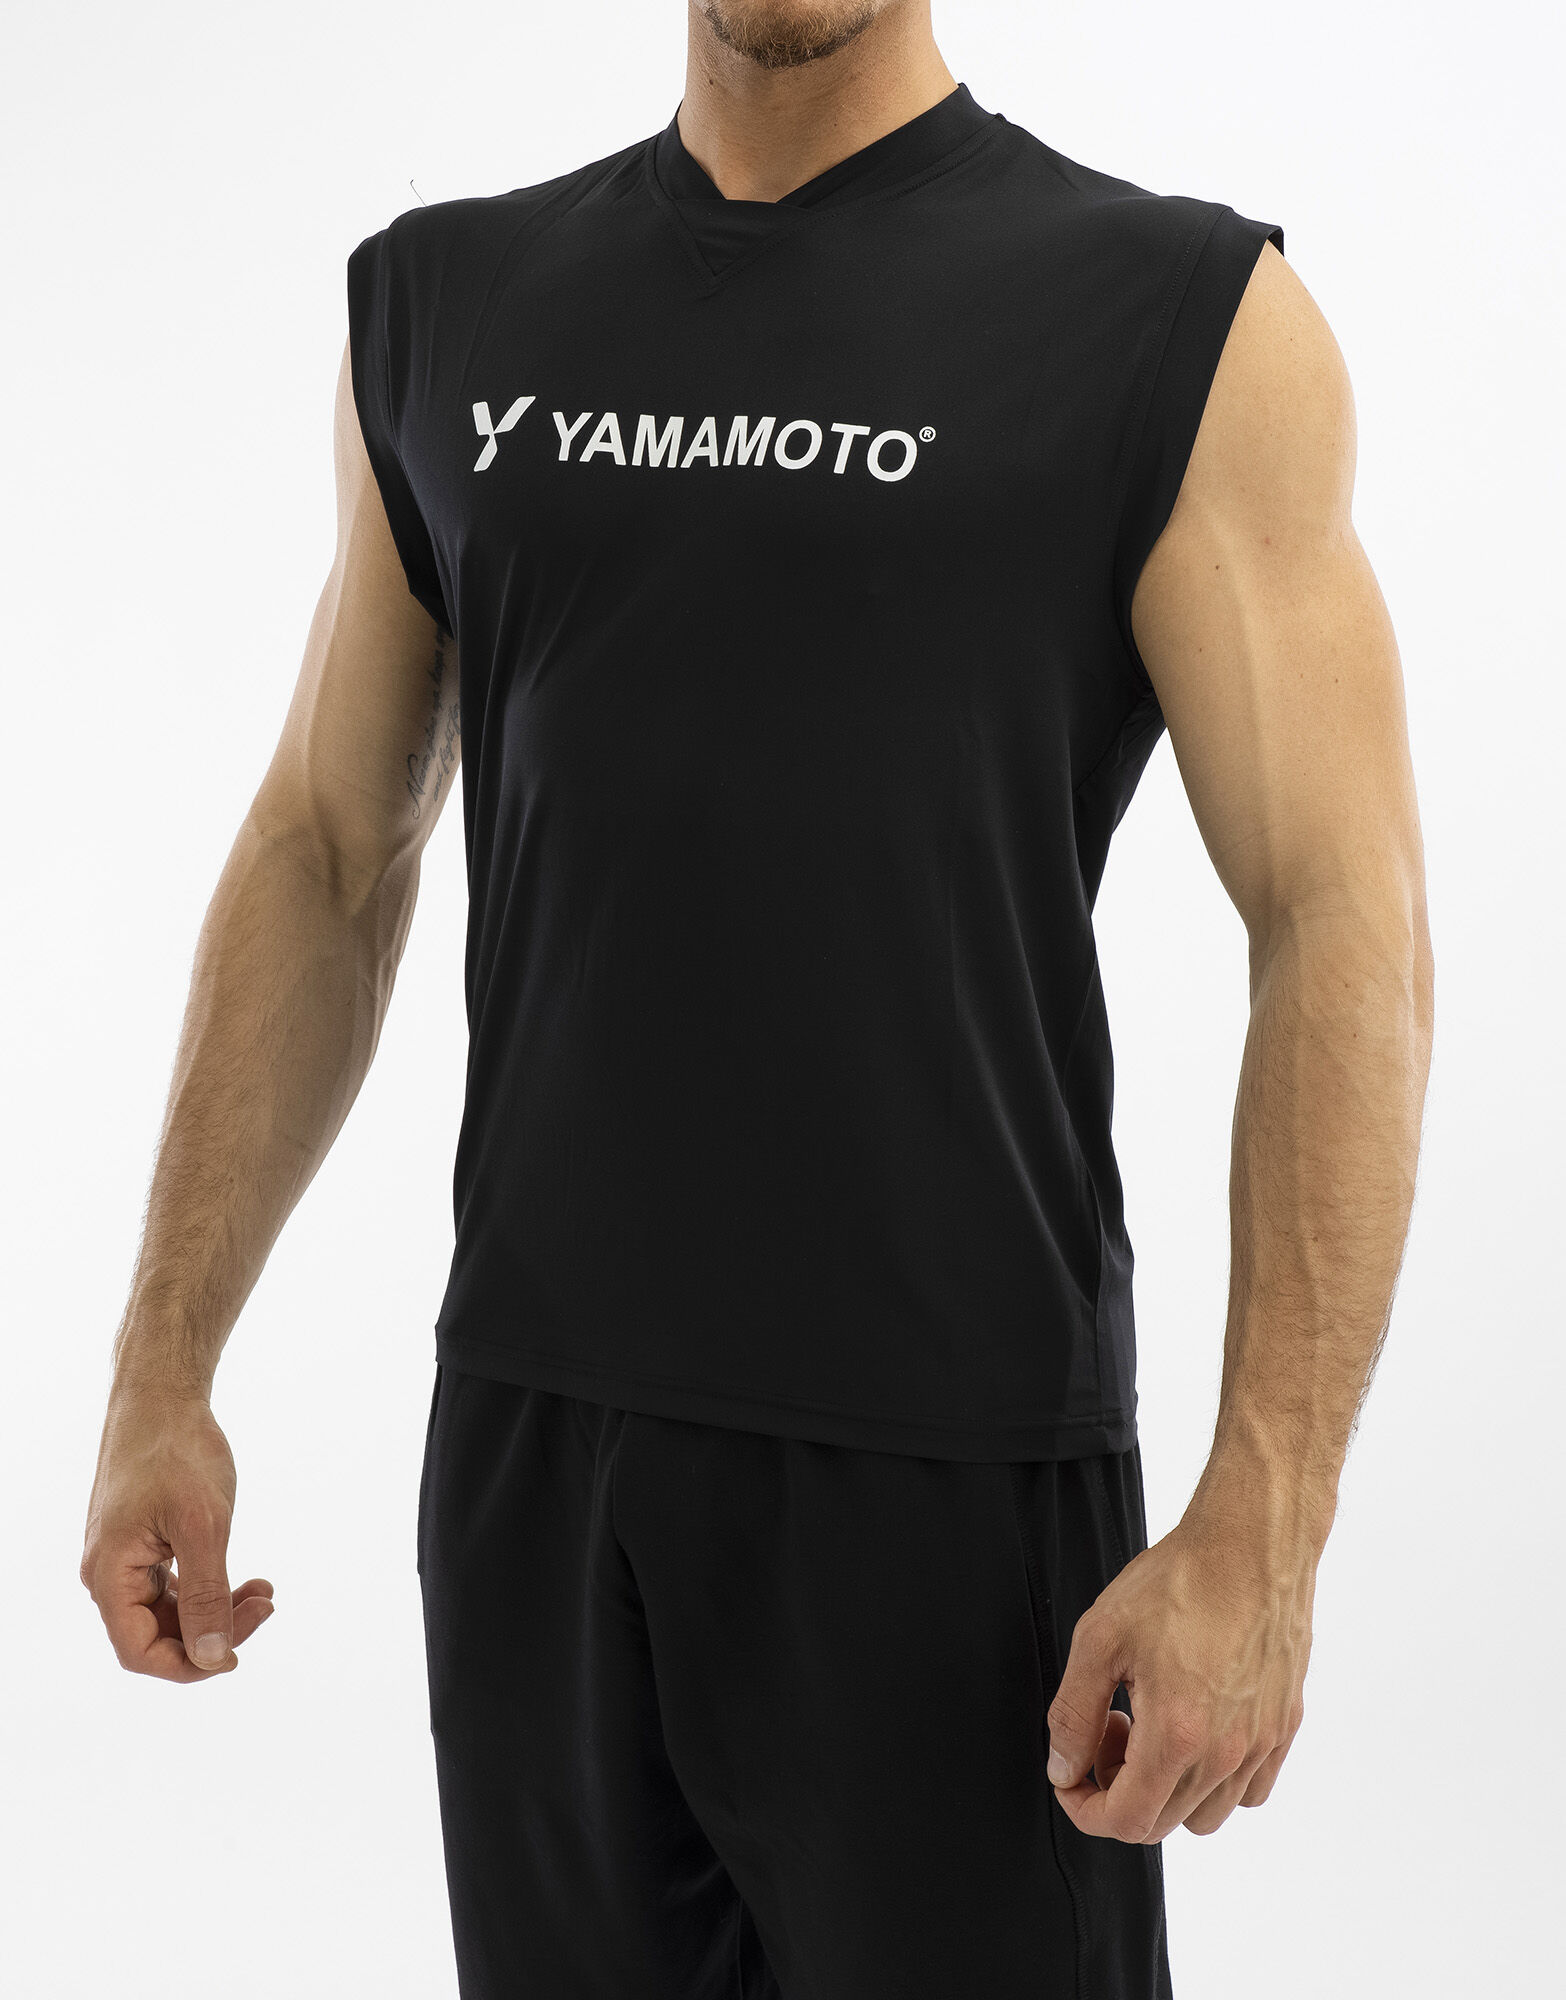 yamamoto outfit man basketball singlet colore: nero s